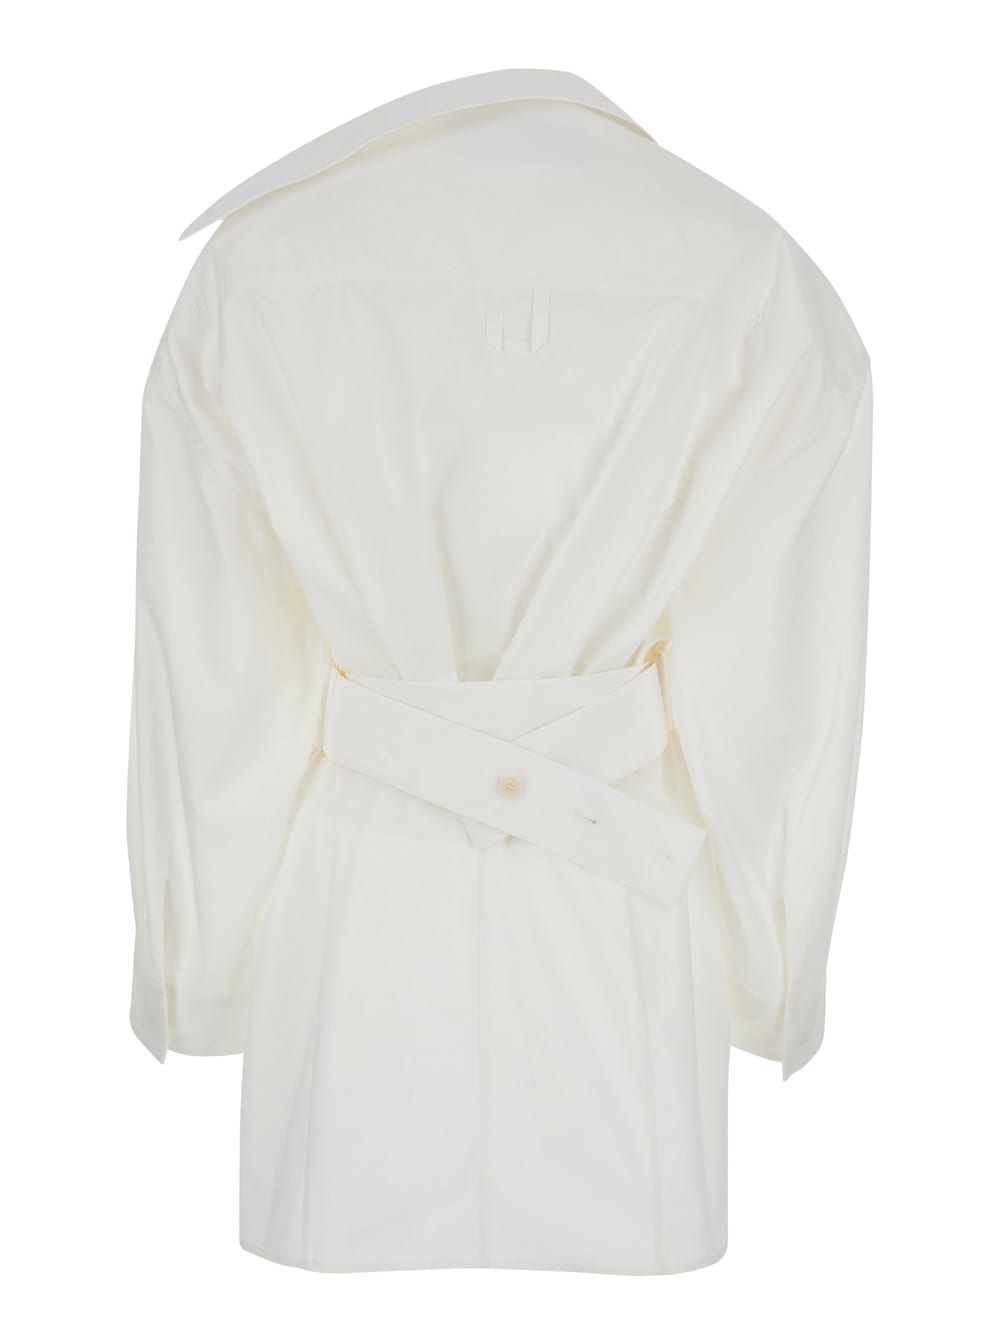 White la Mini Robe Chemise Shirt Dress In Cotton Woman